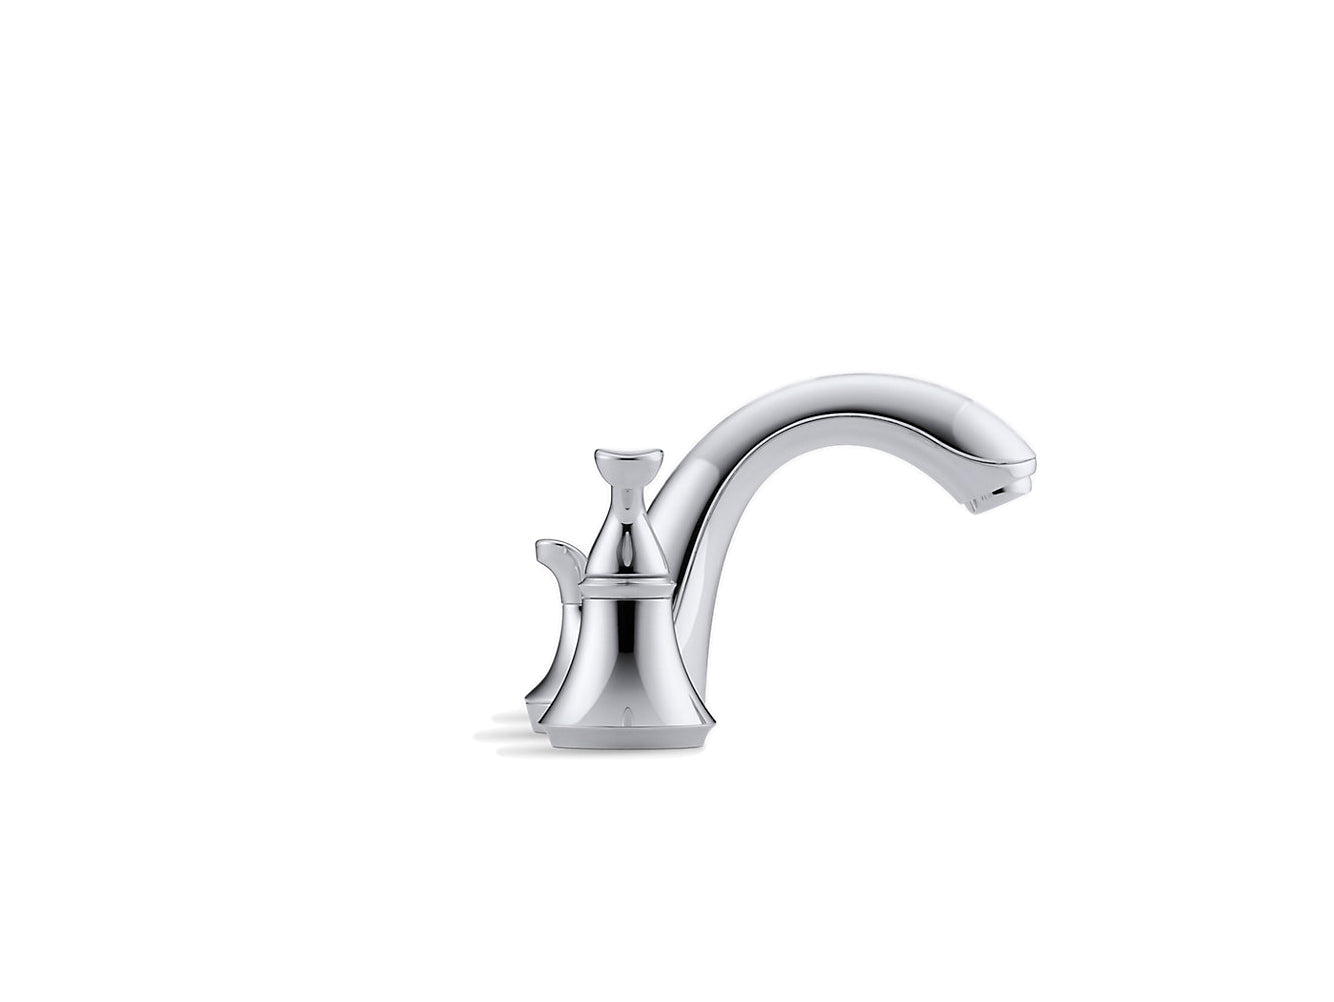 Kohler Forté Widespread Bathroom Sink Faucet With Sculpted Lever Handles - Chrome